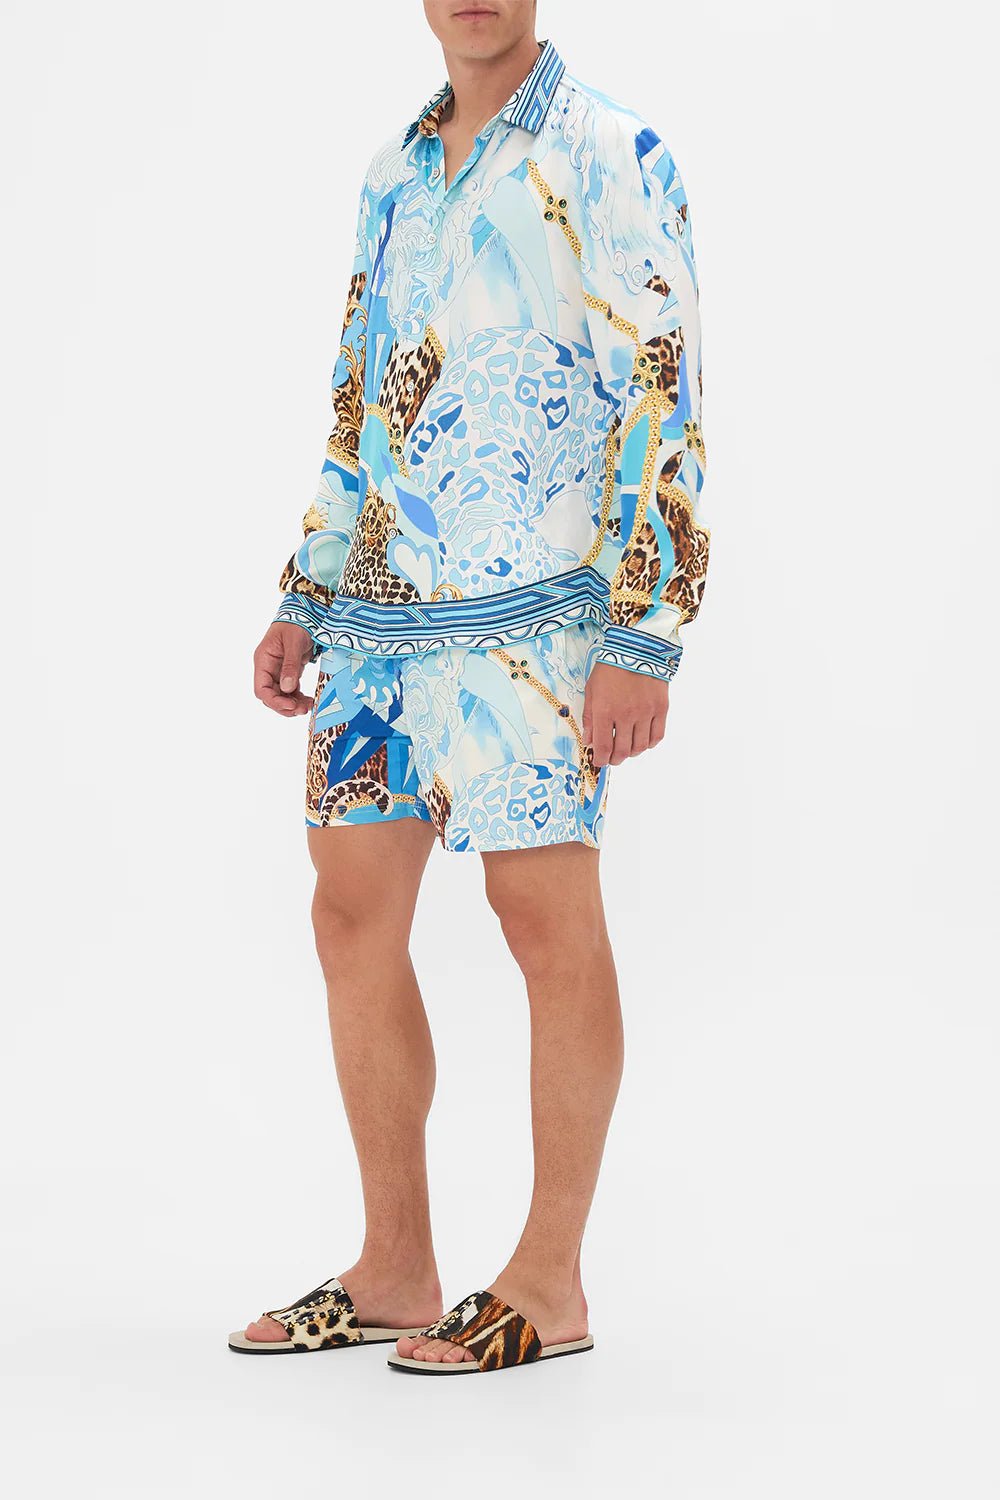 Camilla Collared Long Sleeve Shirt Sky Cheetah - Pinkhill, Darwin boutique, Australian high end fashion, Darwin Fashion